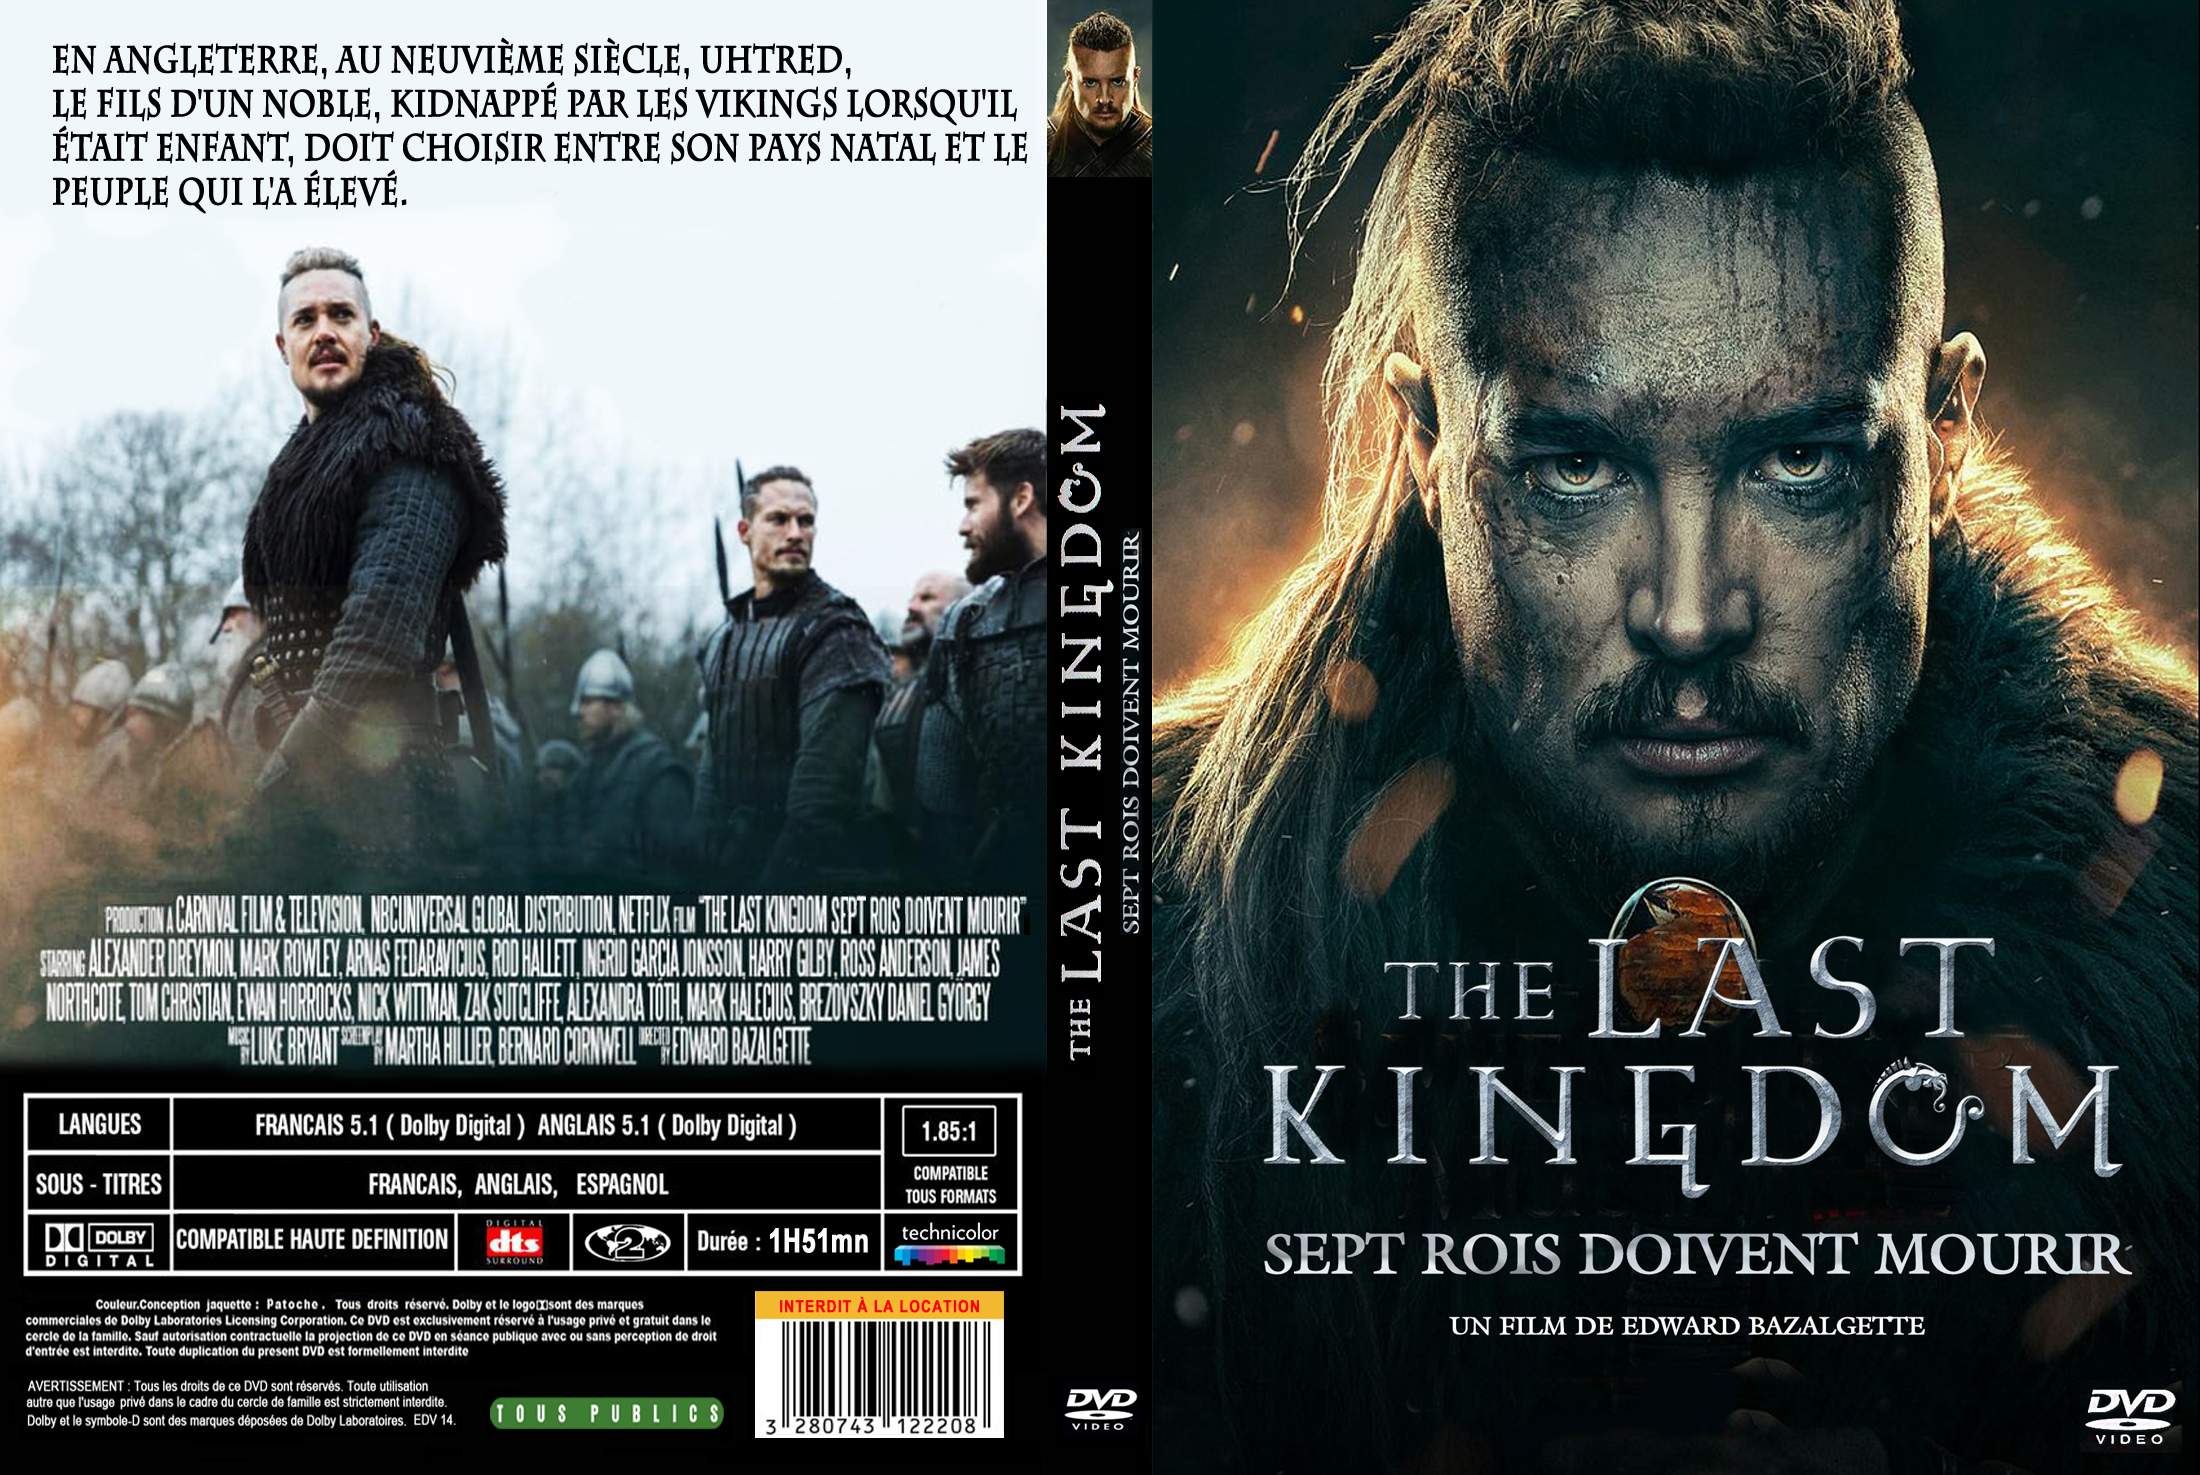 Jaquette DVD The Last Kingdom custom